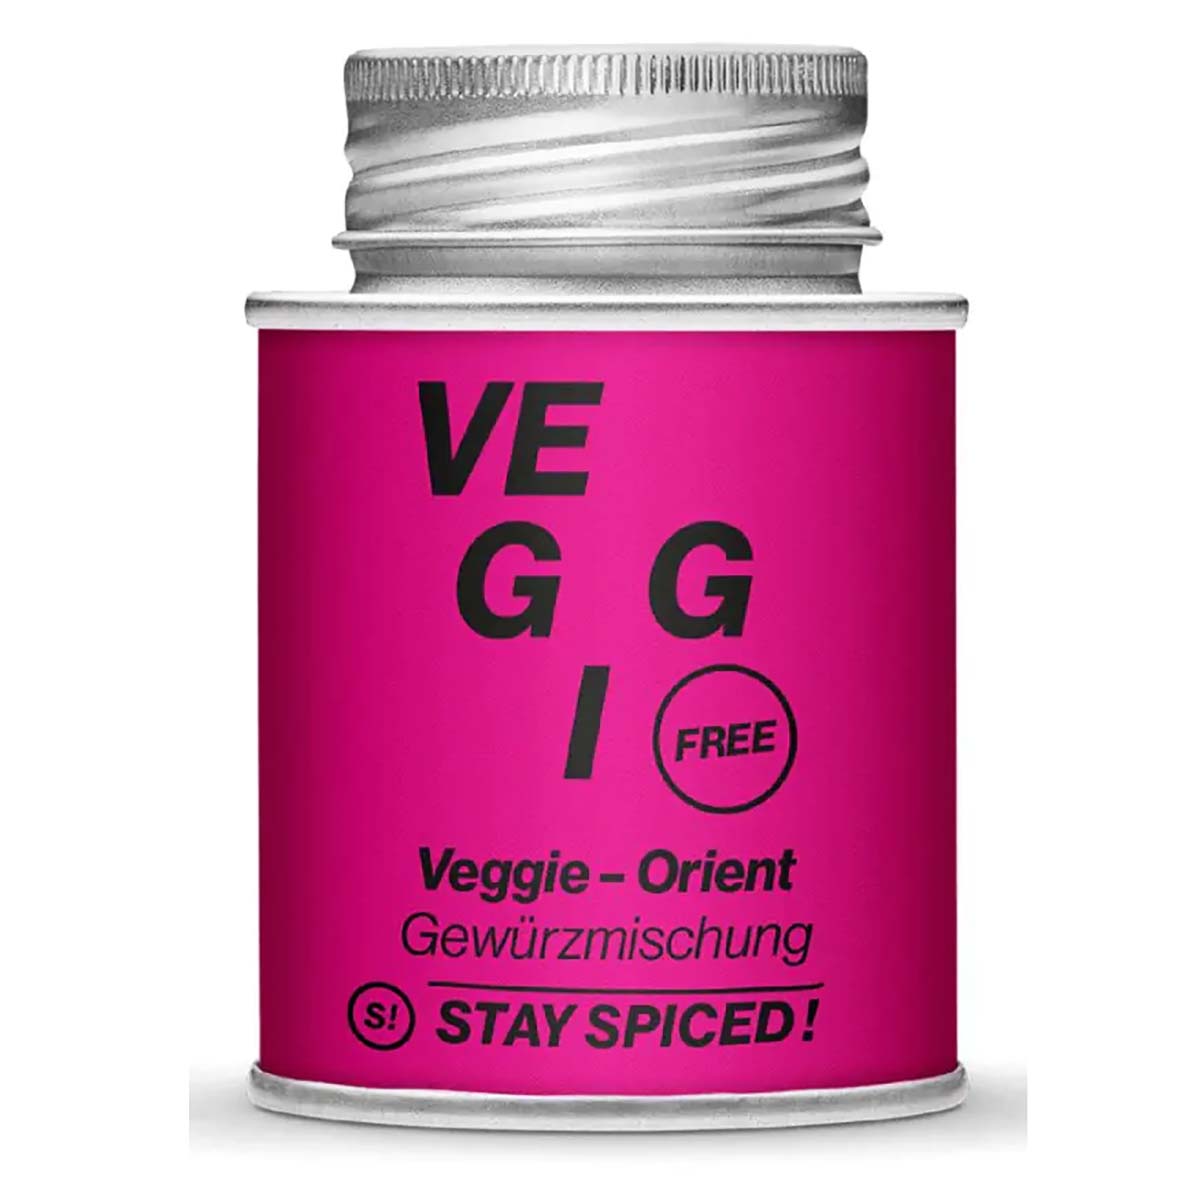 STAY SPICED ! "FREE" Veggie - Orient | 60 g